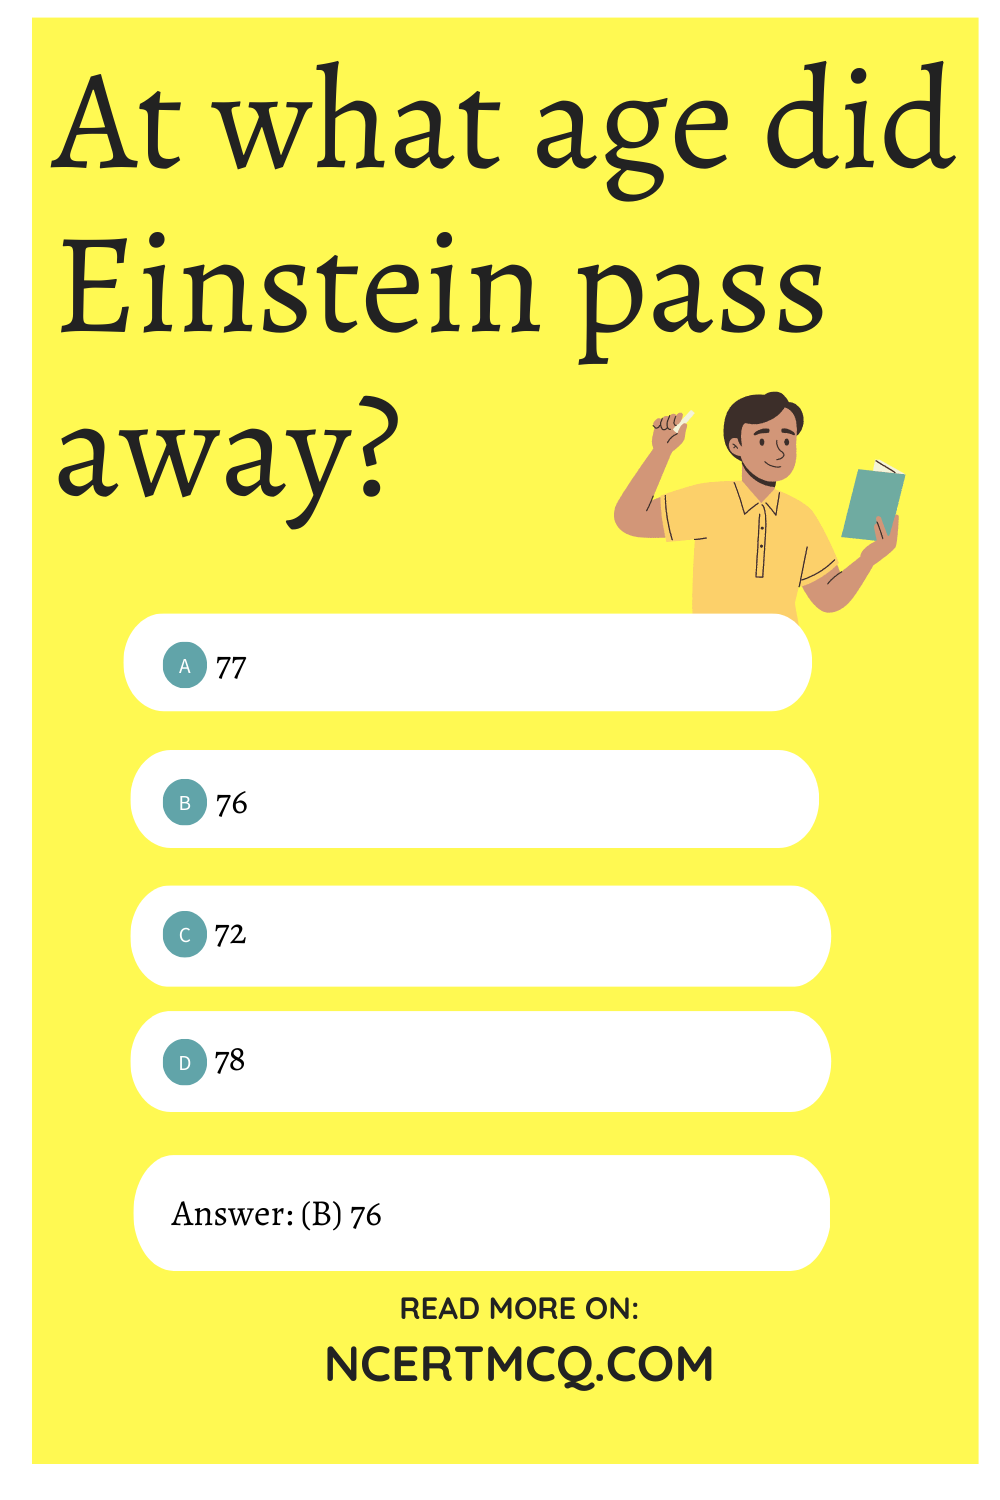 At what age did Einstein pass away?